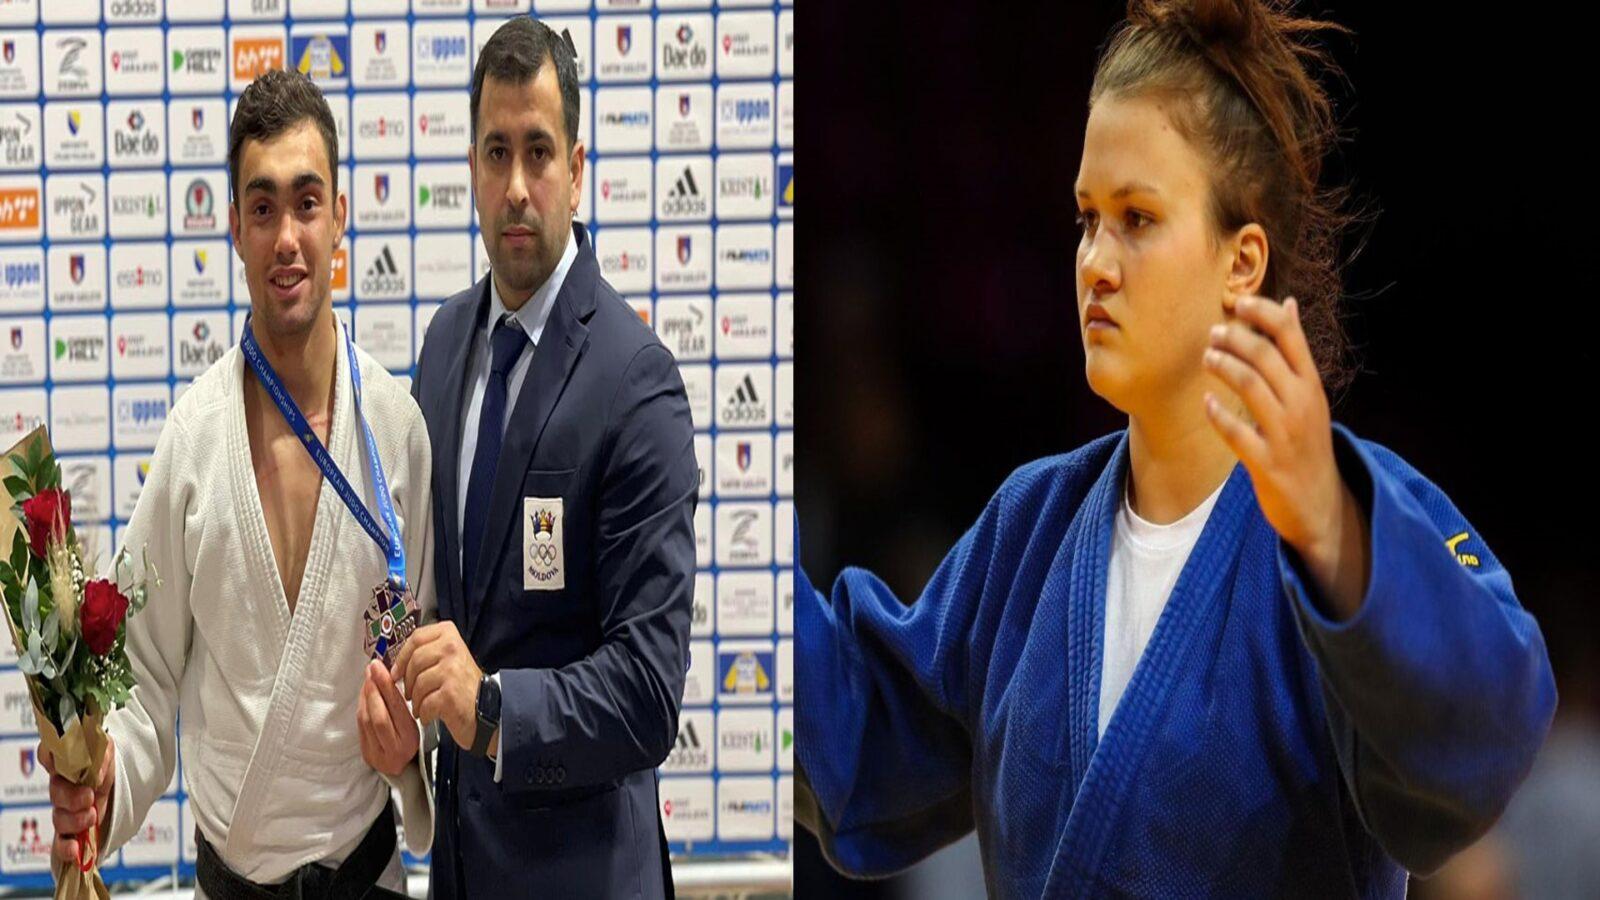 Judocanii Oxana Diacenco și Adil Osmanov au obținut bronzul la Campionatul European Under 23